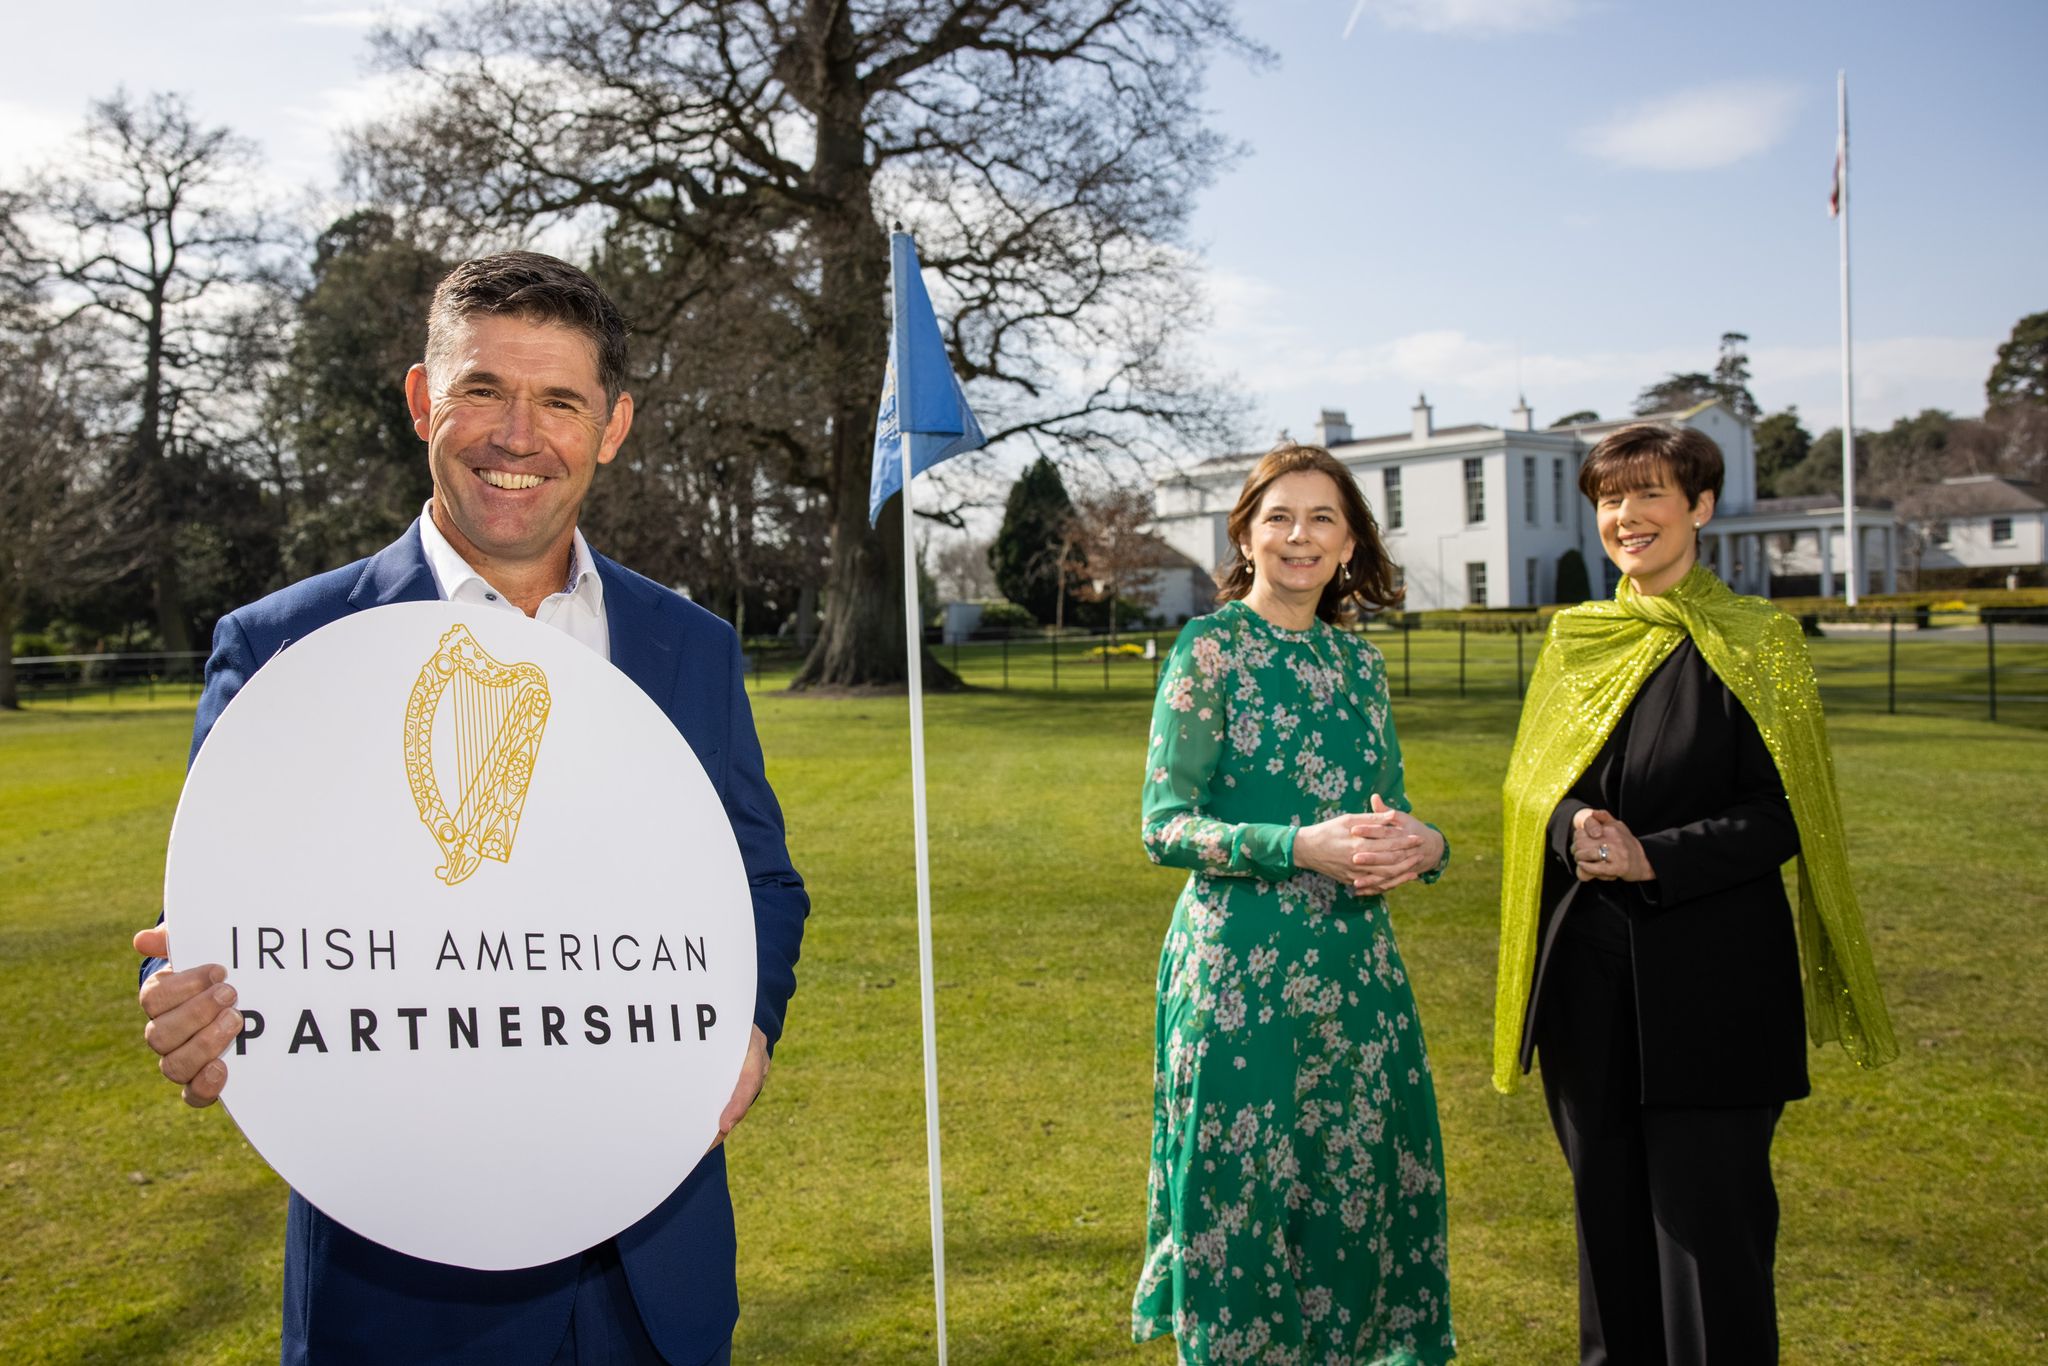 Three-Time Major Champion and European Ryder Cup Captain, Internationally Renowned Golfer Pádraig Harrington Announces Patronage of the Irish American Partnership